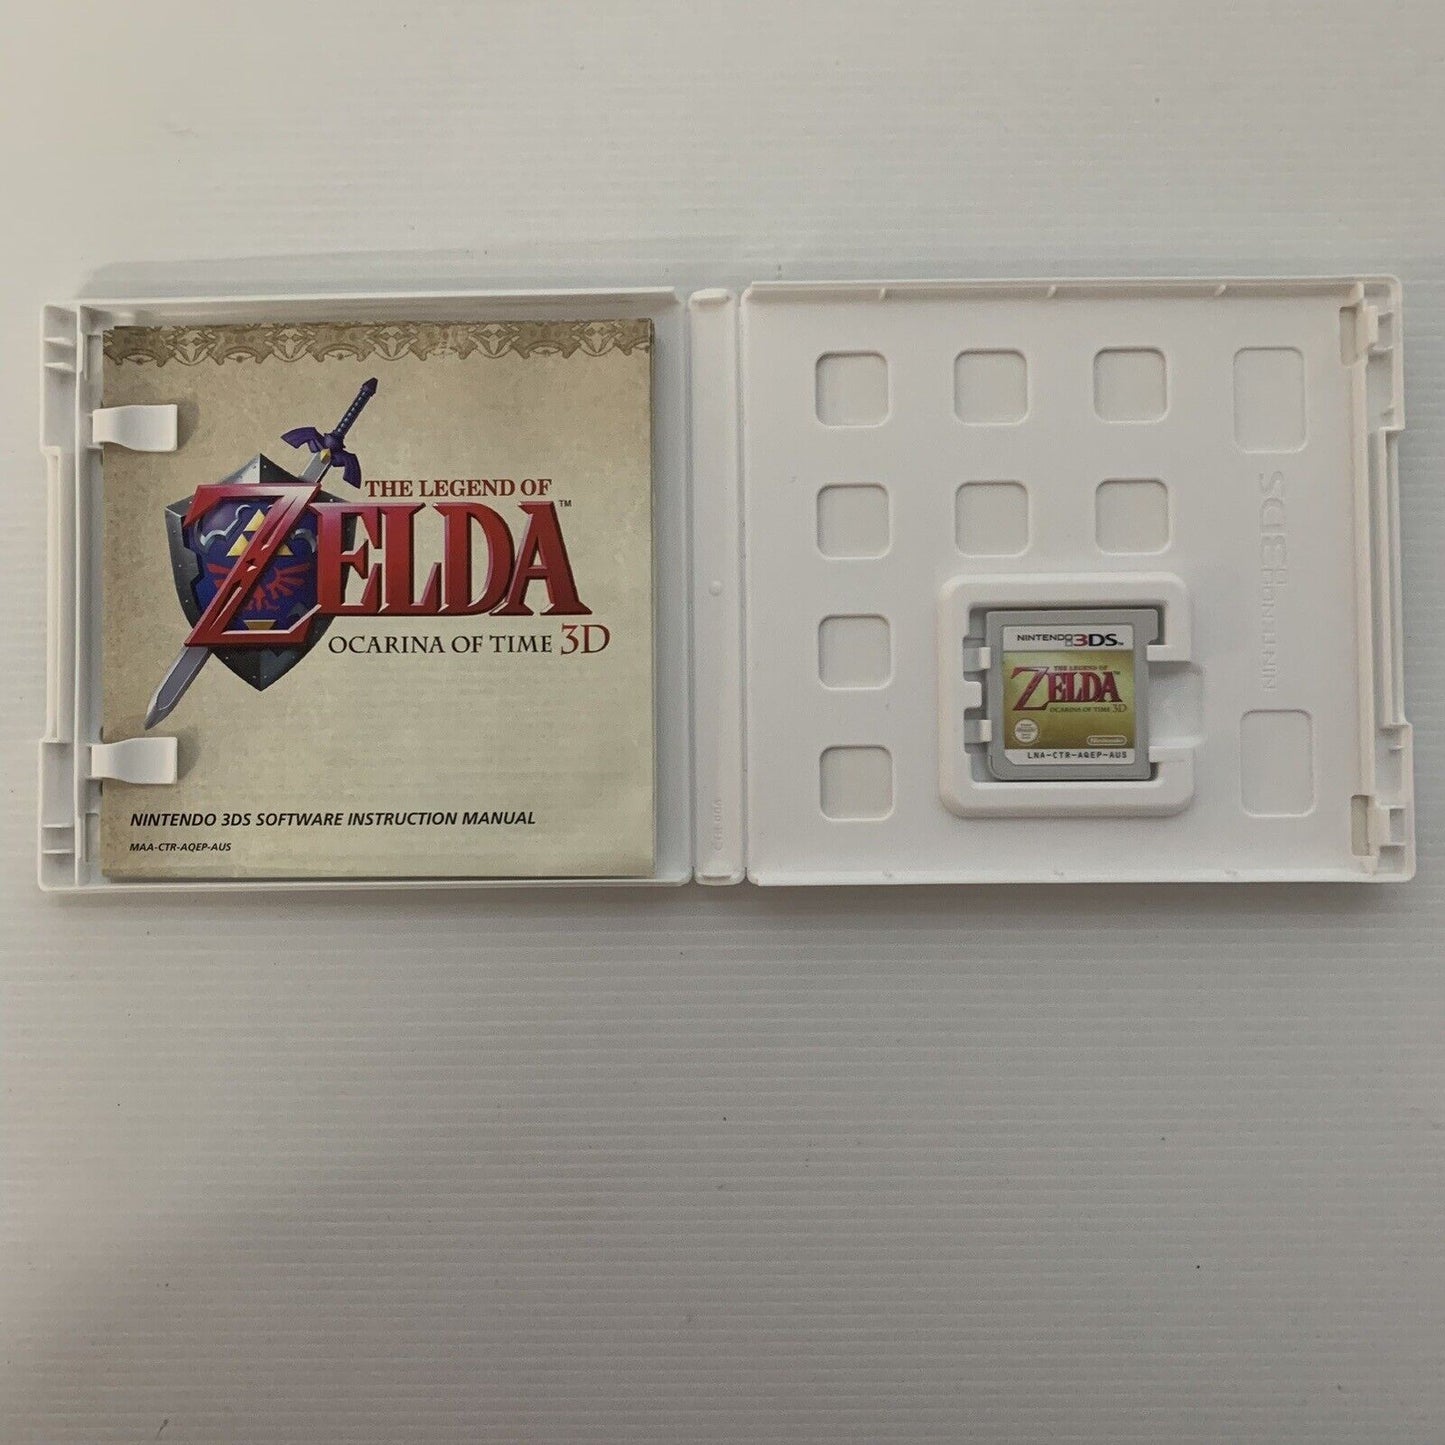 The Legend of Zelda Ocarina of Time 3D Game Nintendo 3DS